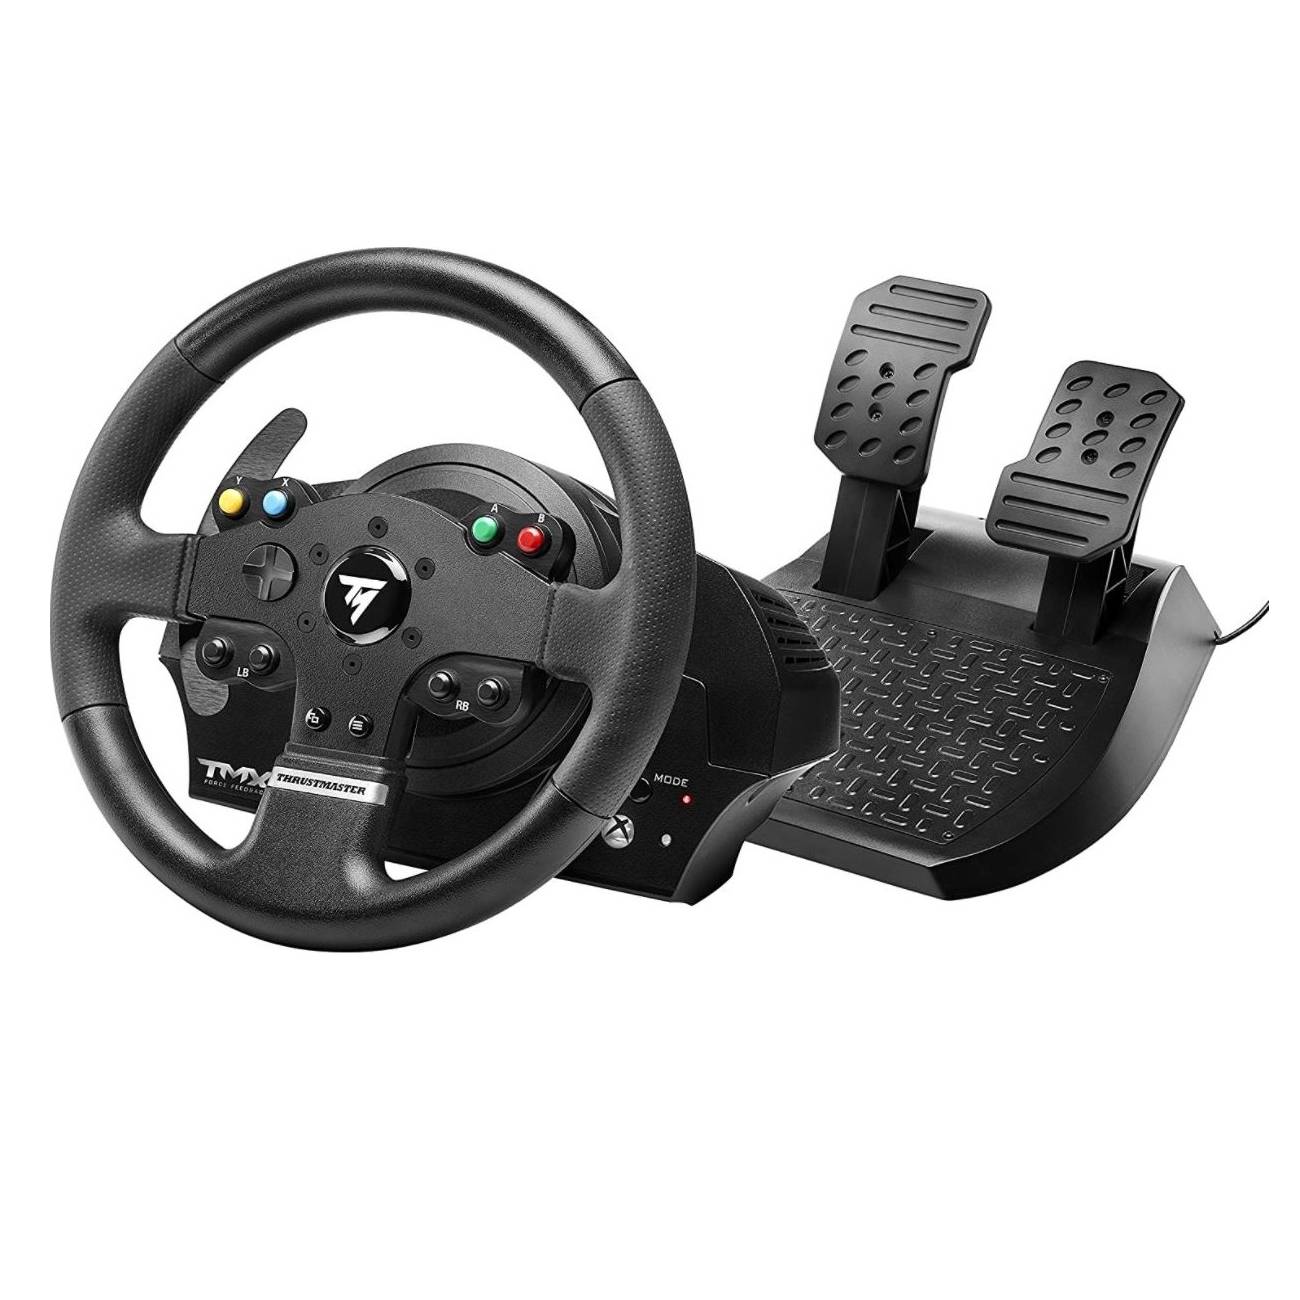 Thrustmaster TMX Force Feedback Racing Wheel for Xbox/PC